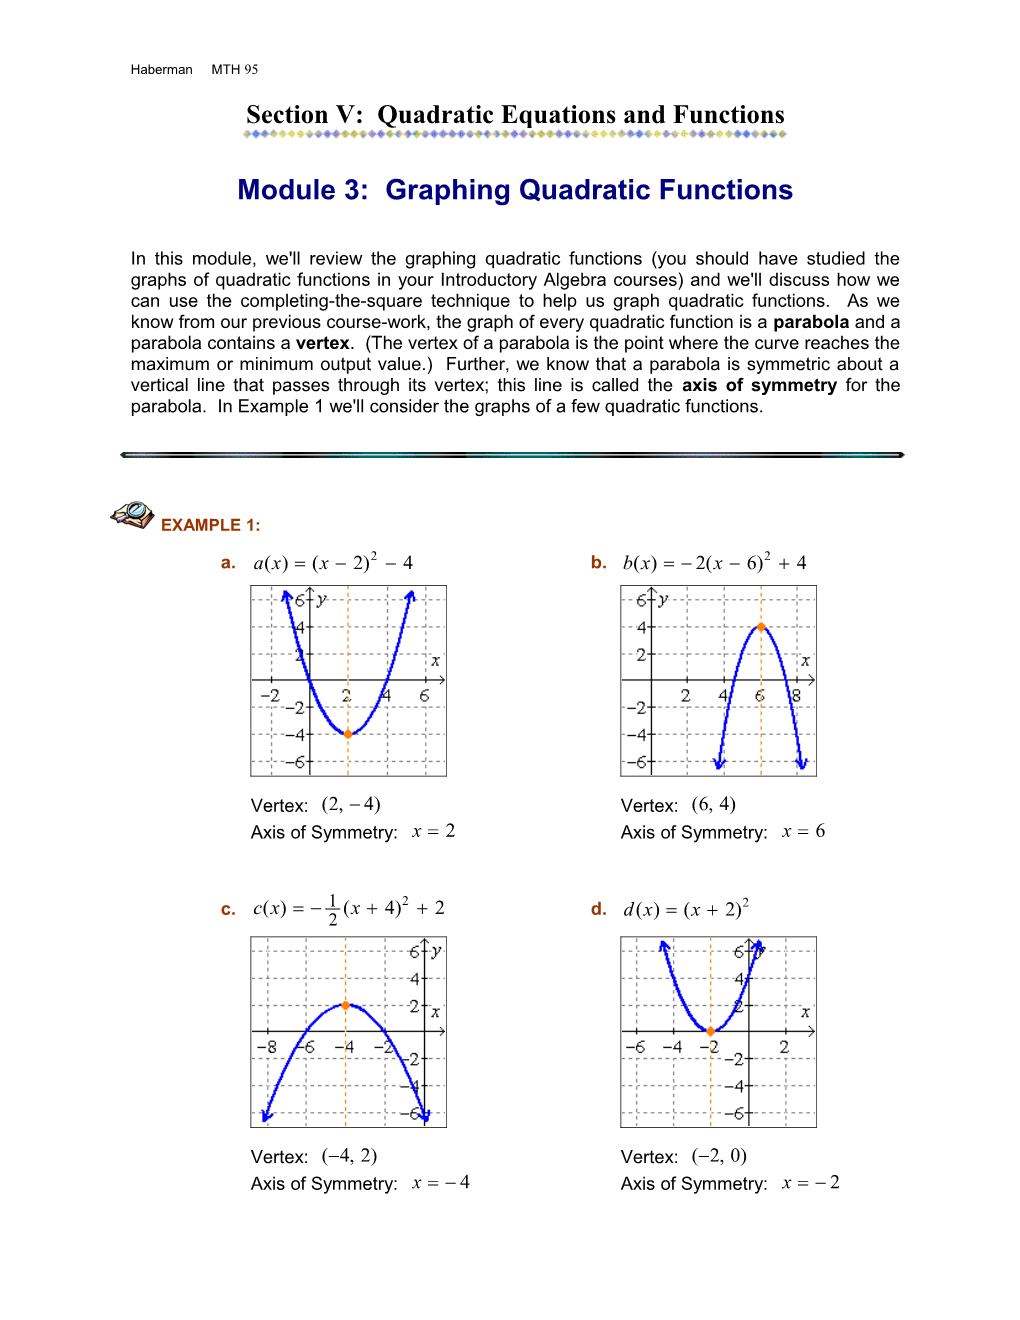 Module 3: Graphing Quadratic Functions